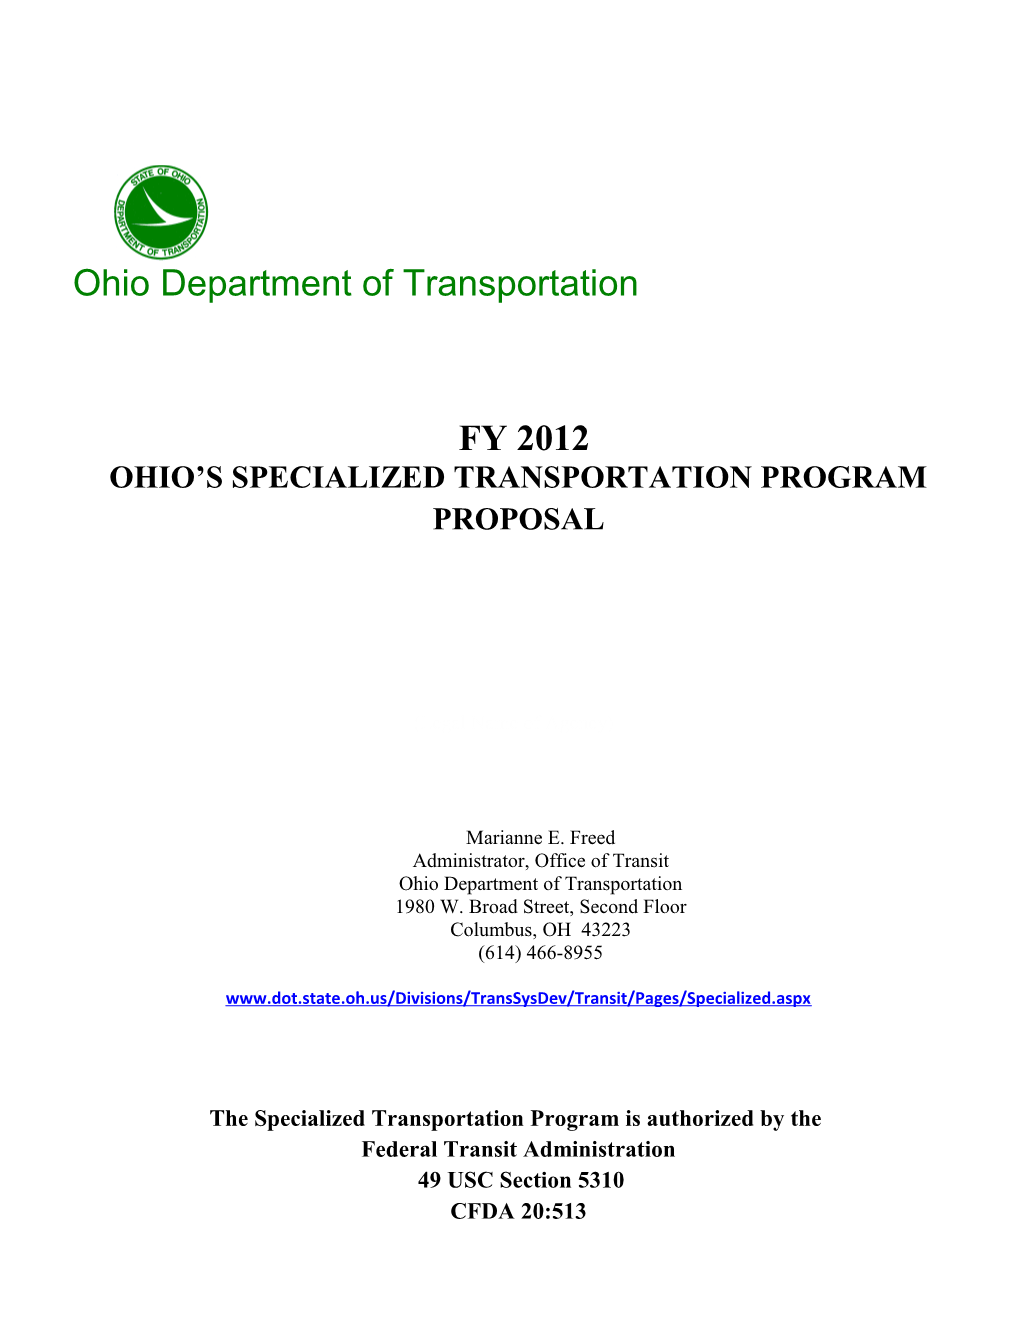 Ohio S Specialized Transportation Program